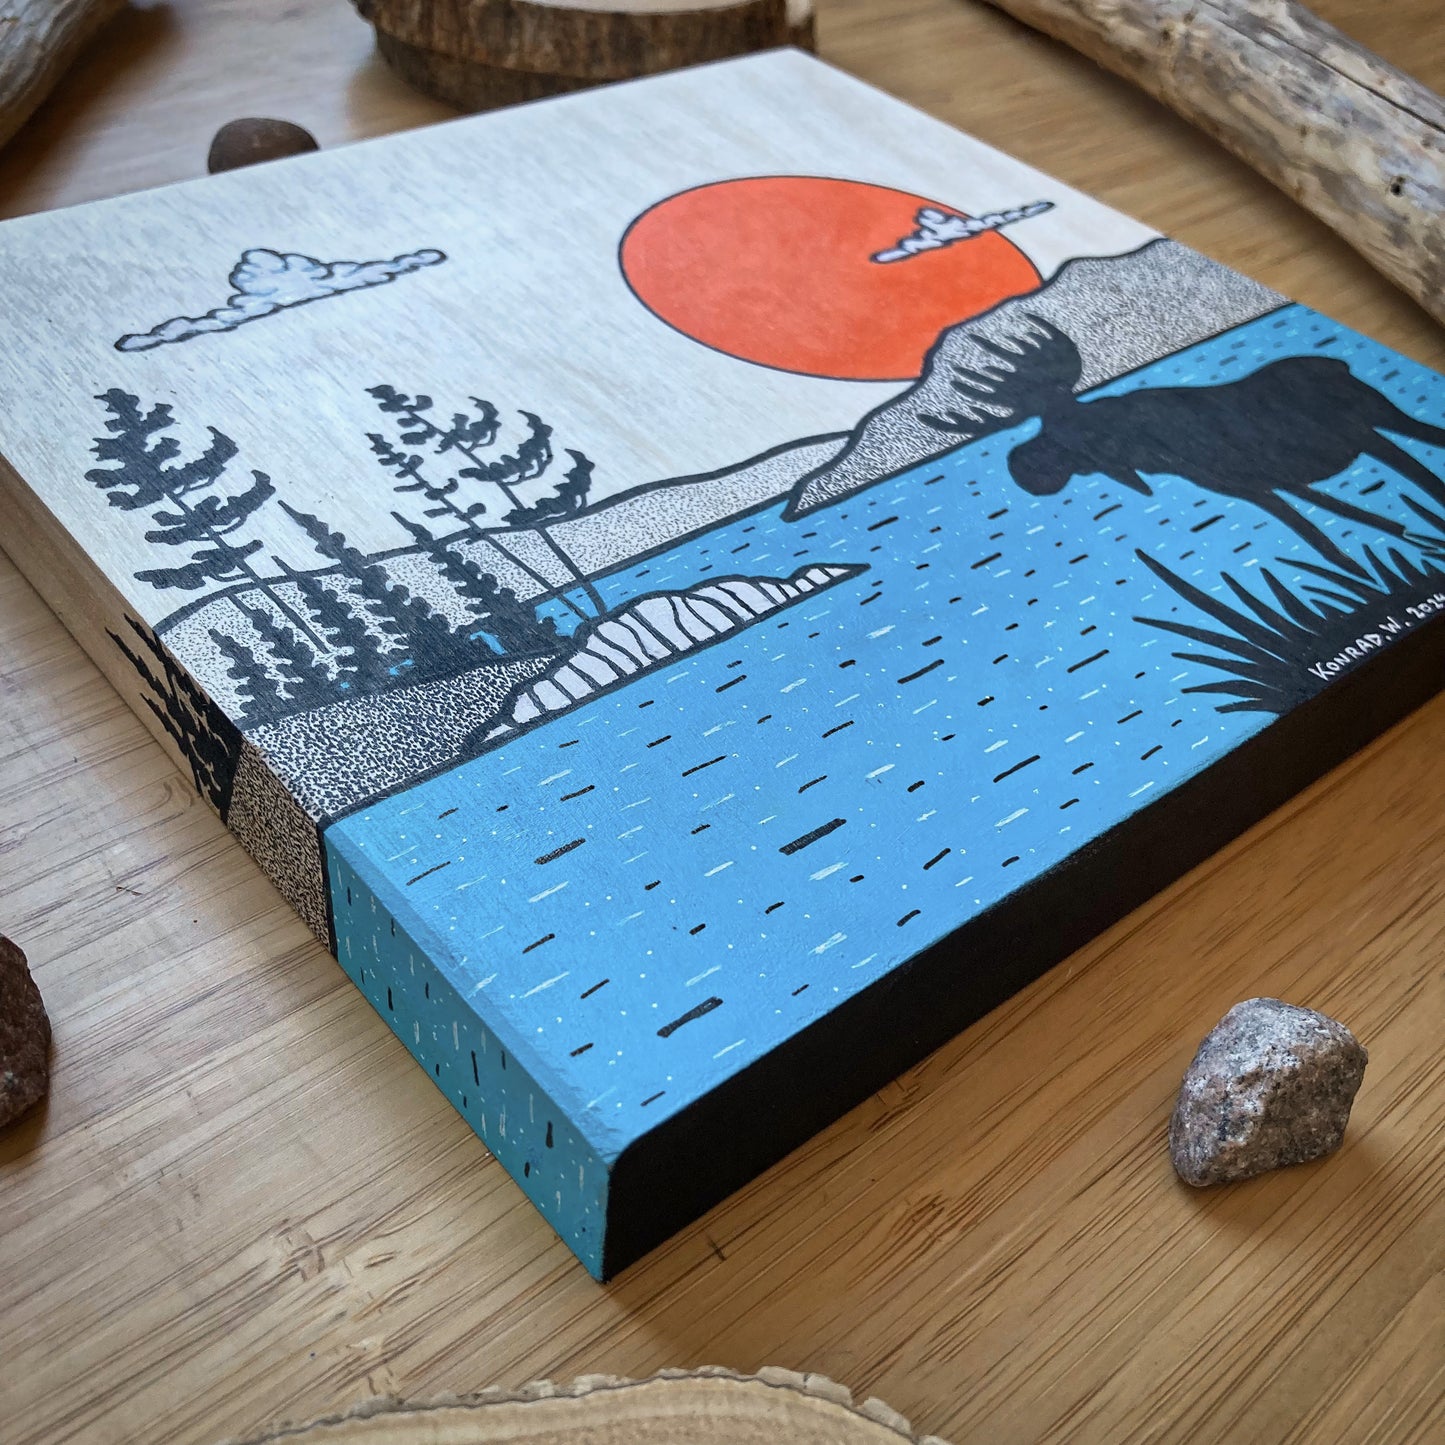 Moose By The Lake - ORIGINAL 8x8 Wood Panel Illustration